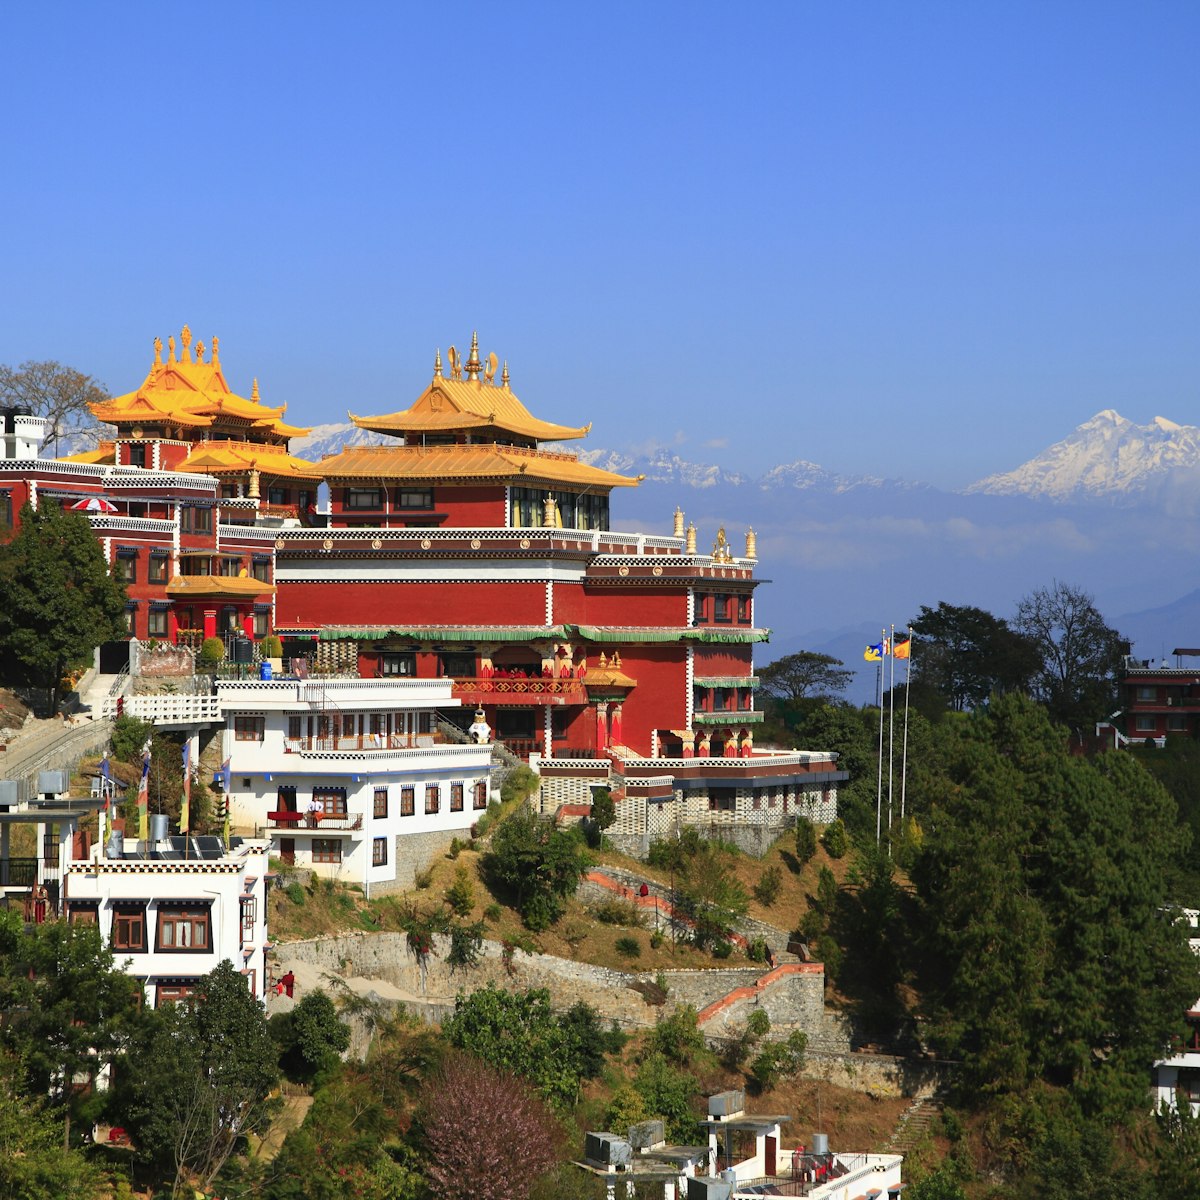 The Thrangu Tashi Yangtse Monastery in Nepal.